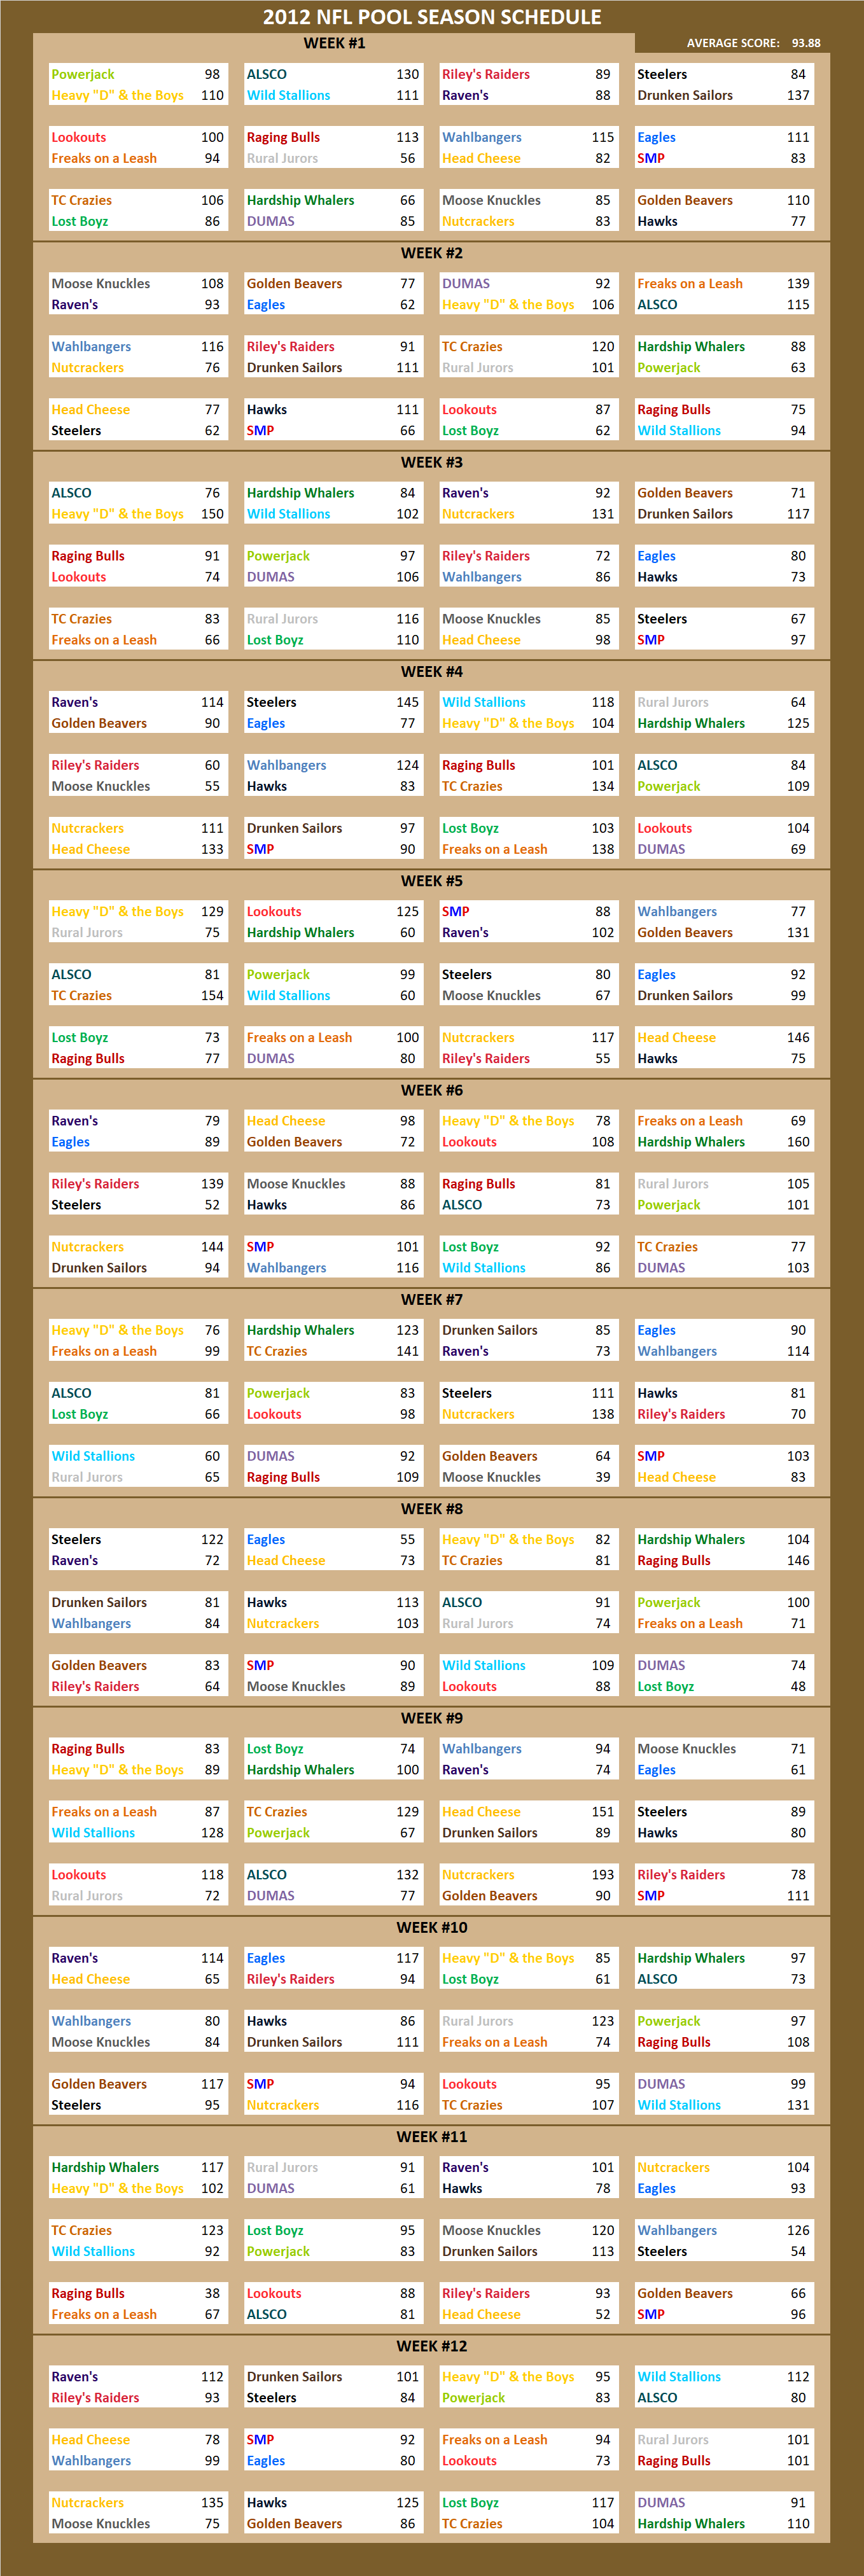 2012 National Football League Pool Season Schedule